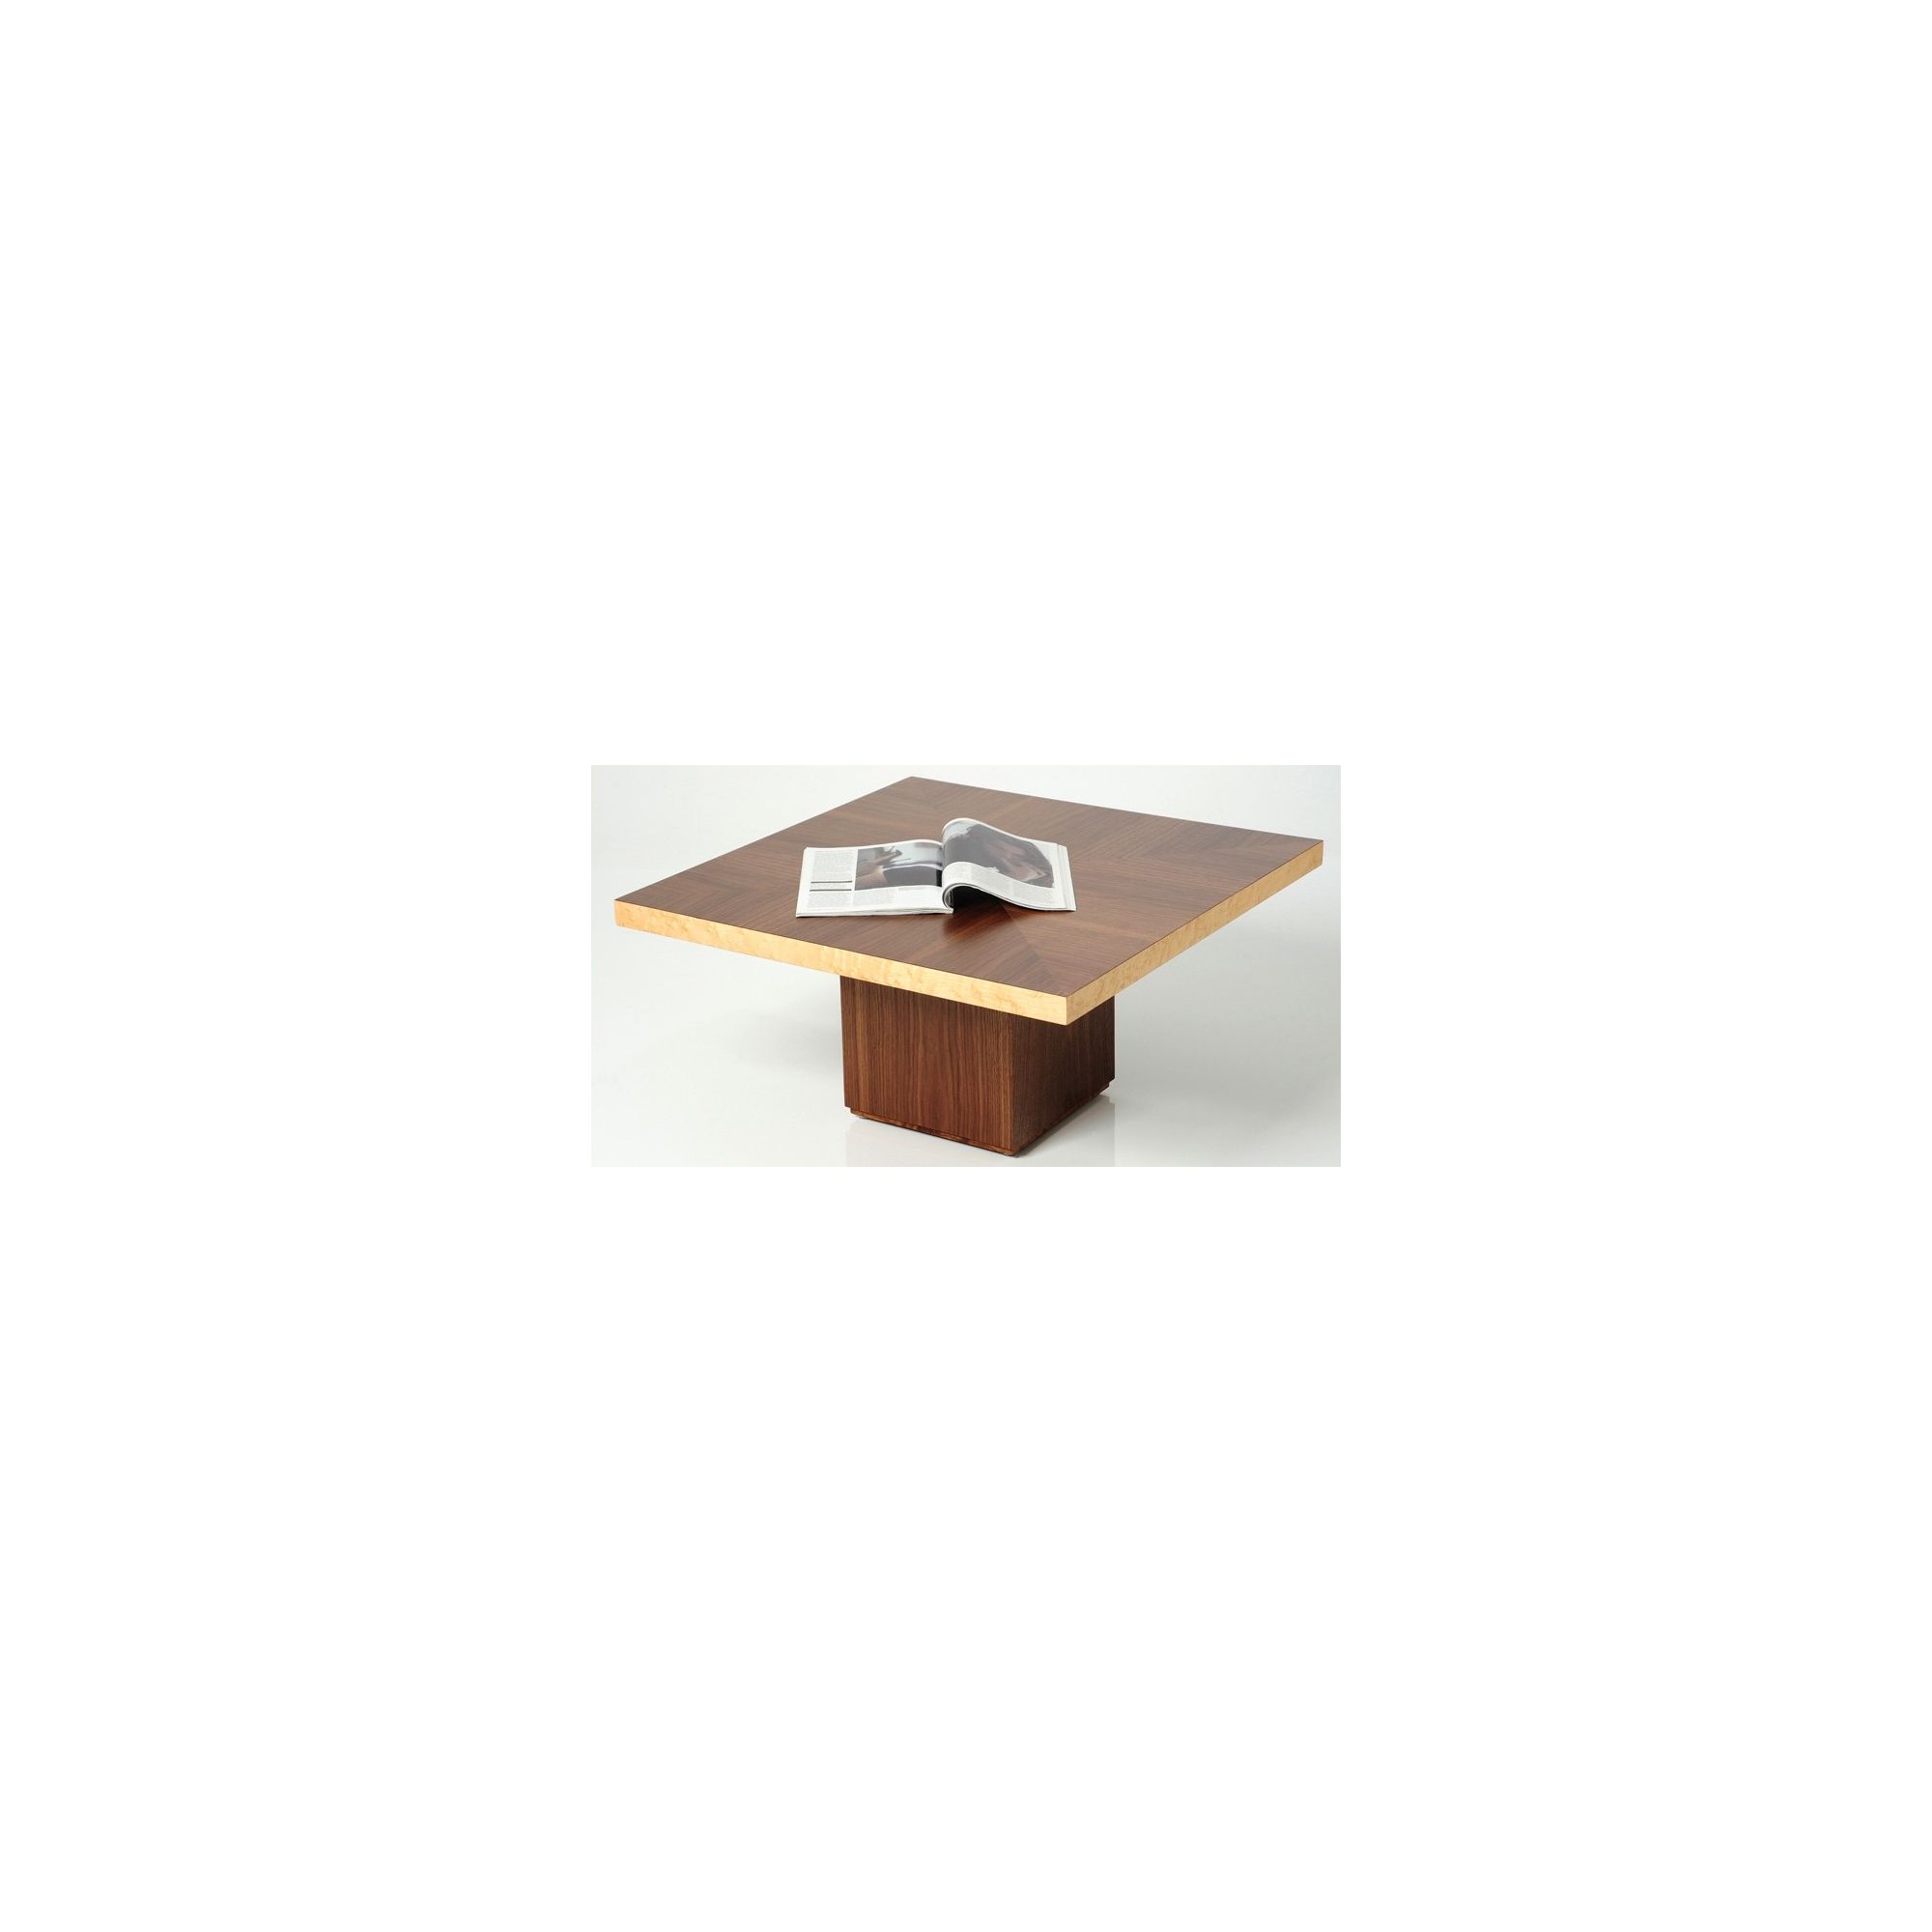 Trefurn Tablet Coffee Table - Fumed Oak at Tesco Direct